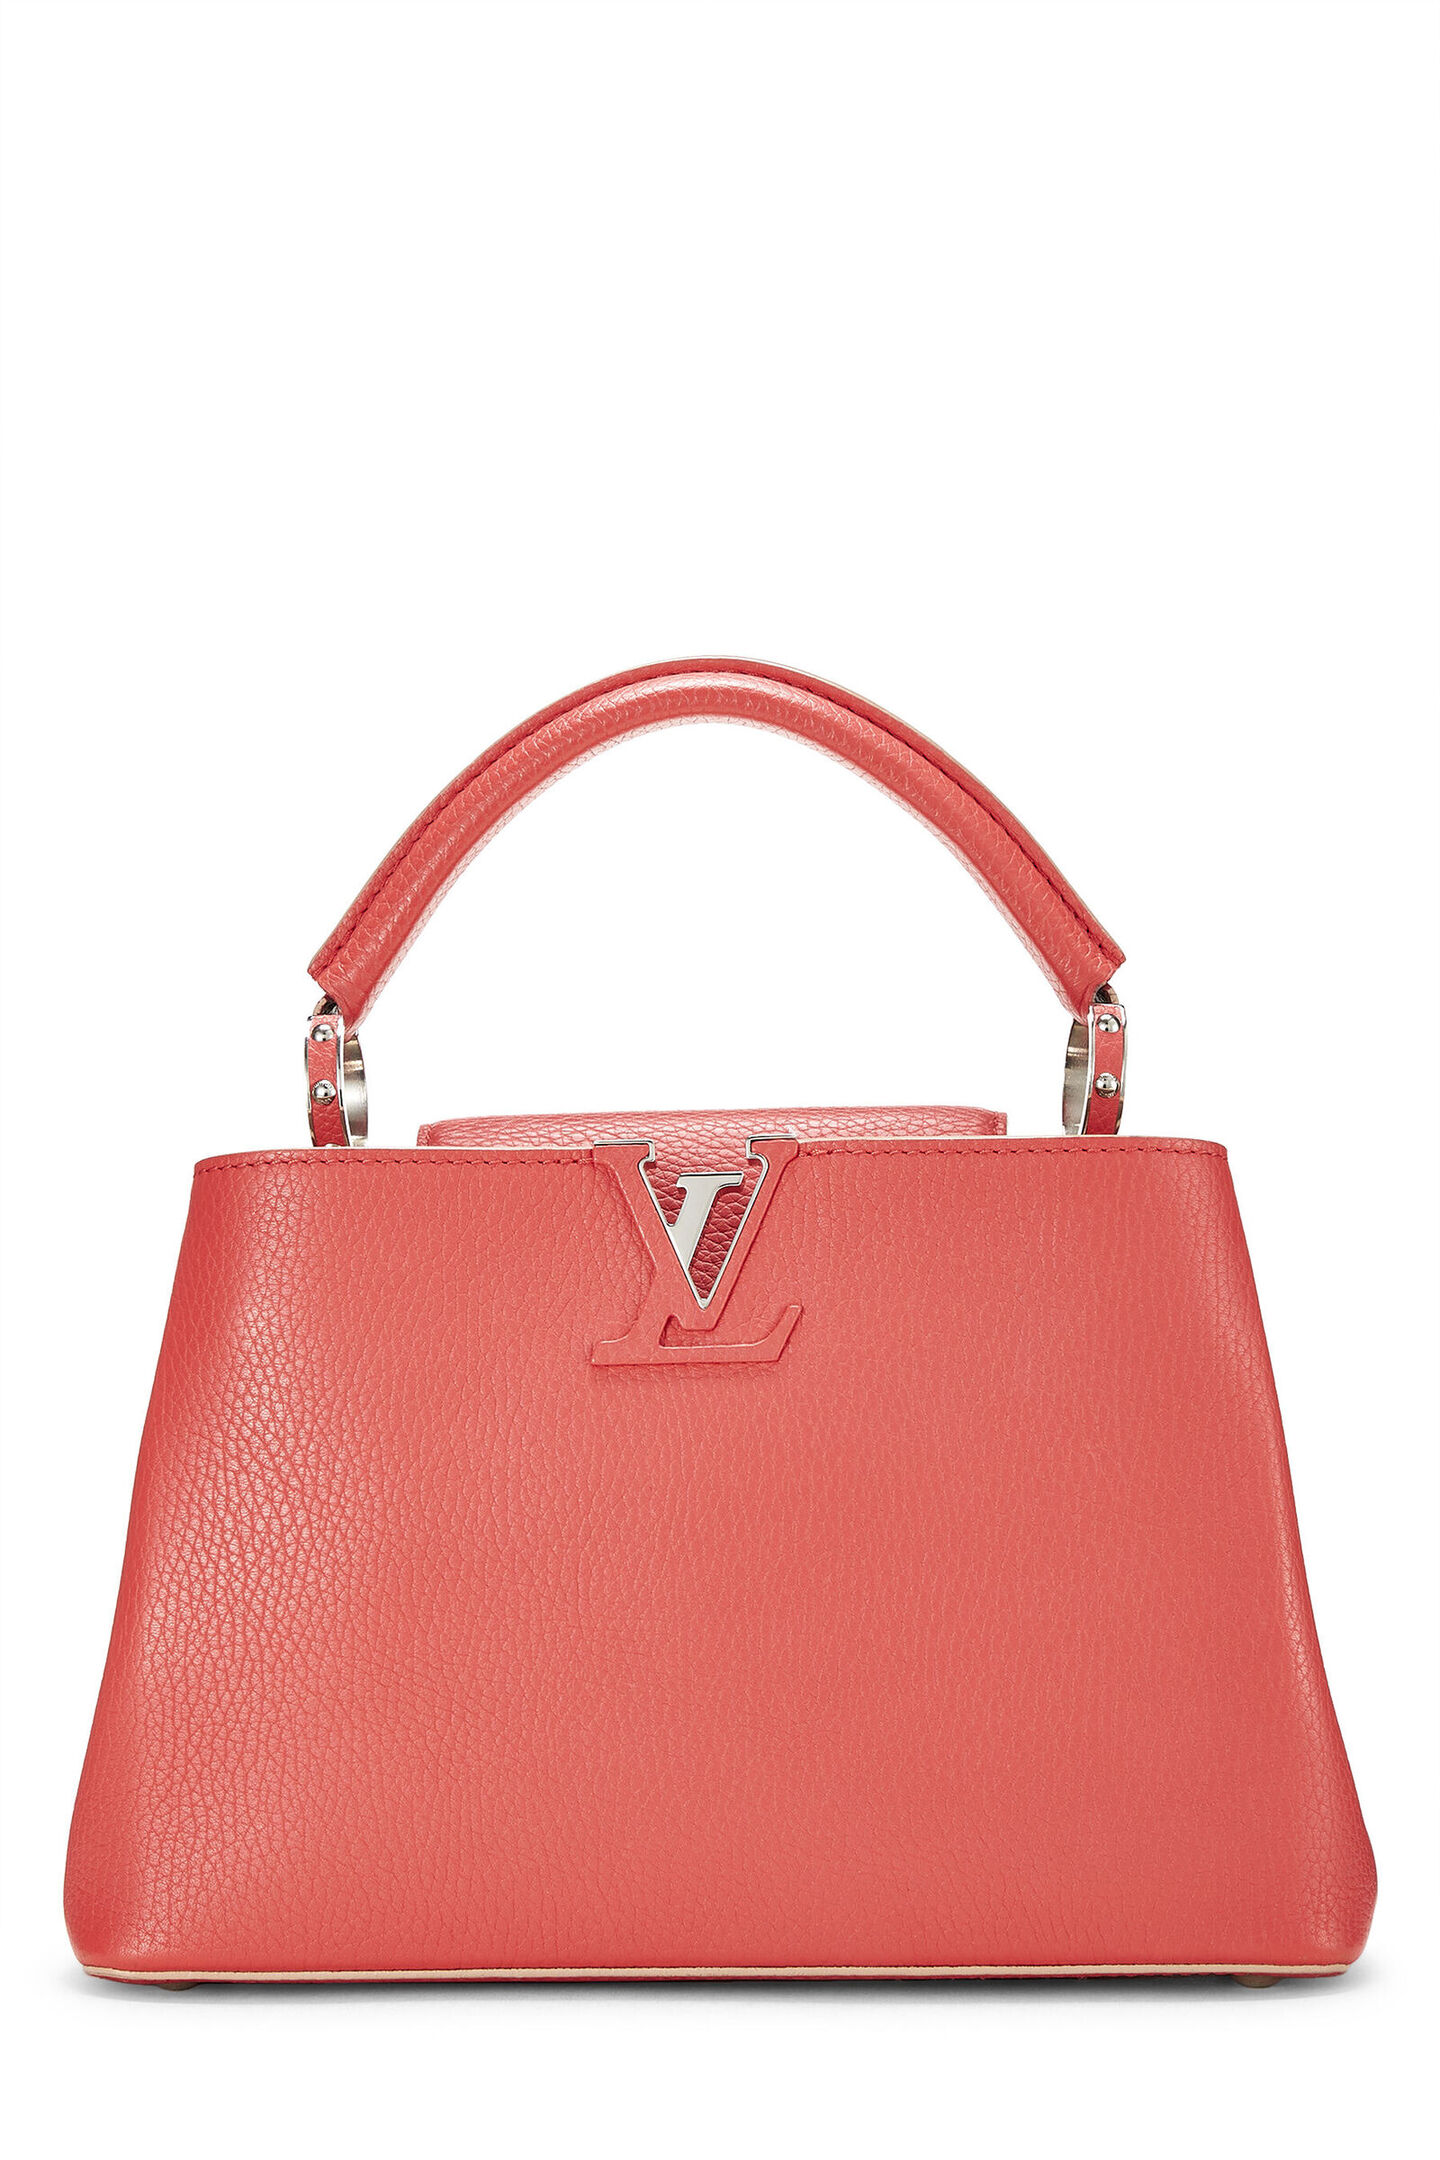 A history of Louis Vuitton's Speedy bag - Vogue Australia